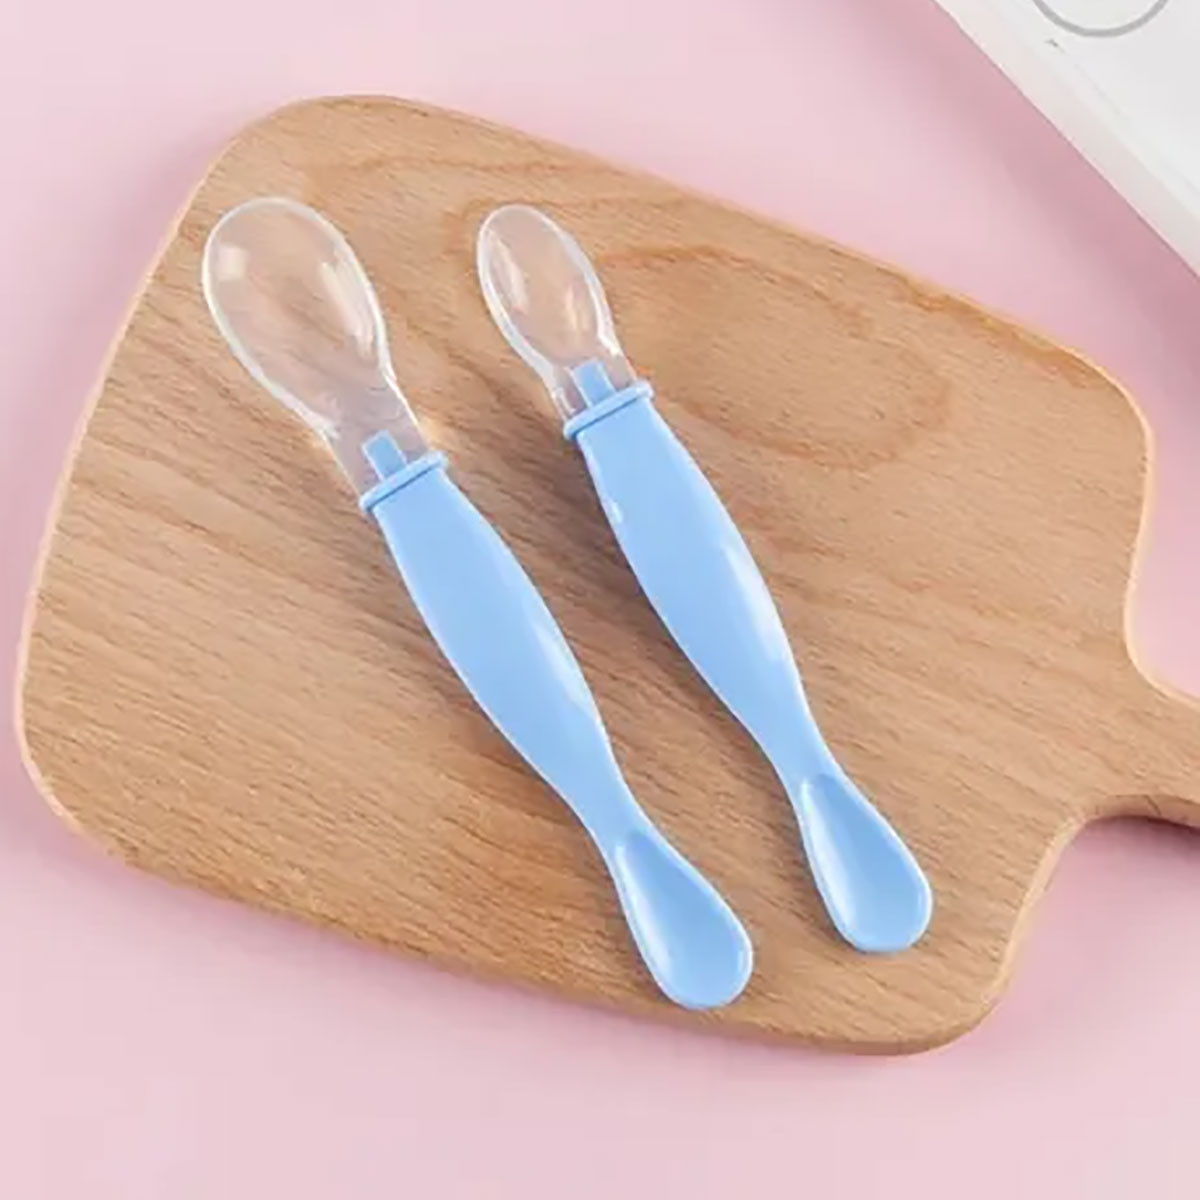  4 cucharas de silicona para bebé, a prueba de aceite